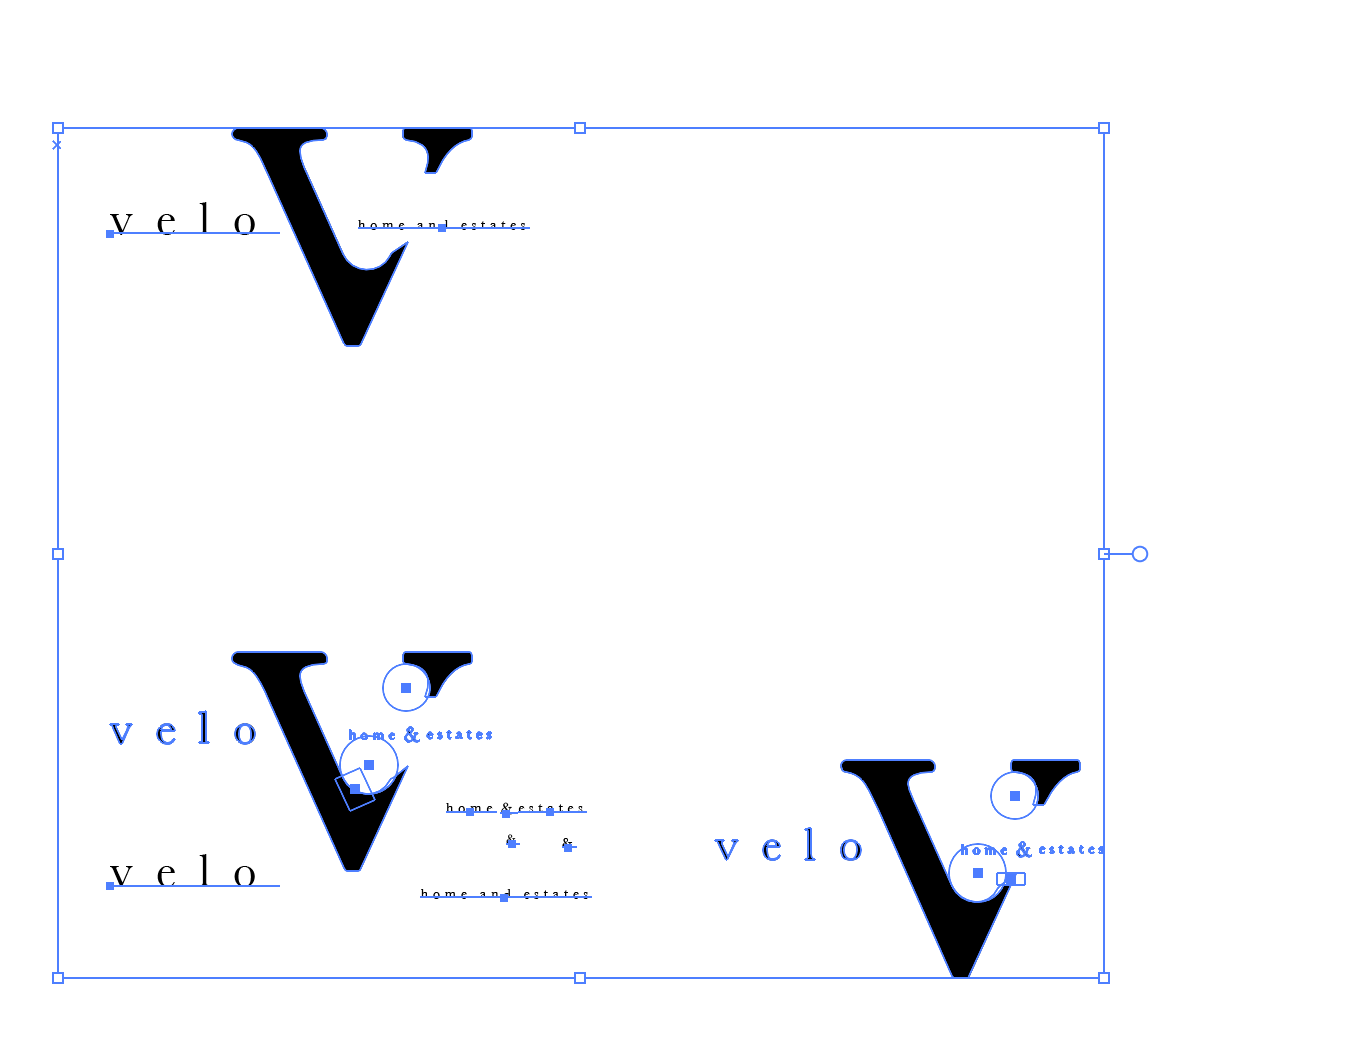 velo-logo-workspace-austin-belisle-1.png